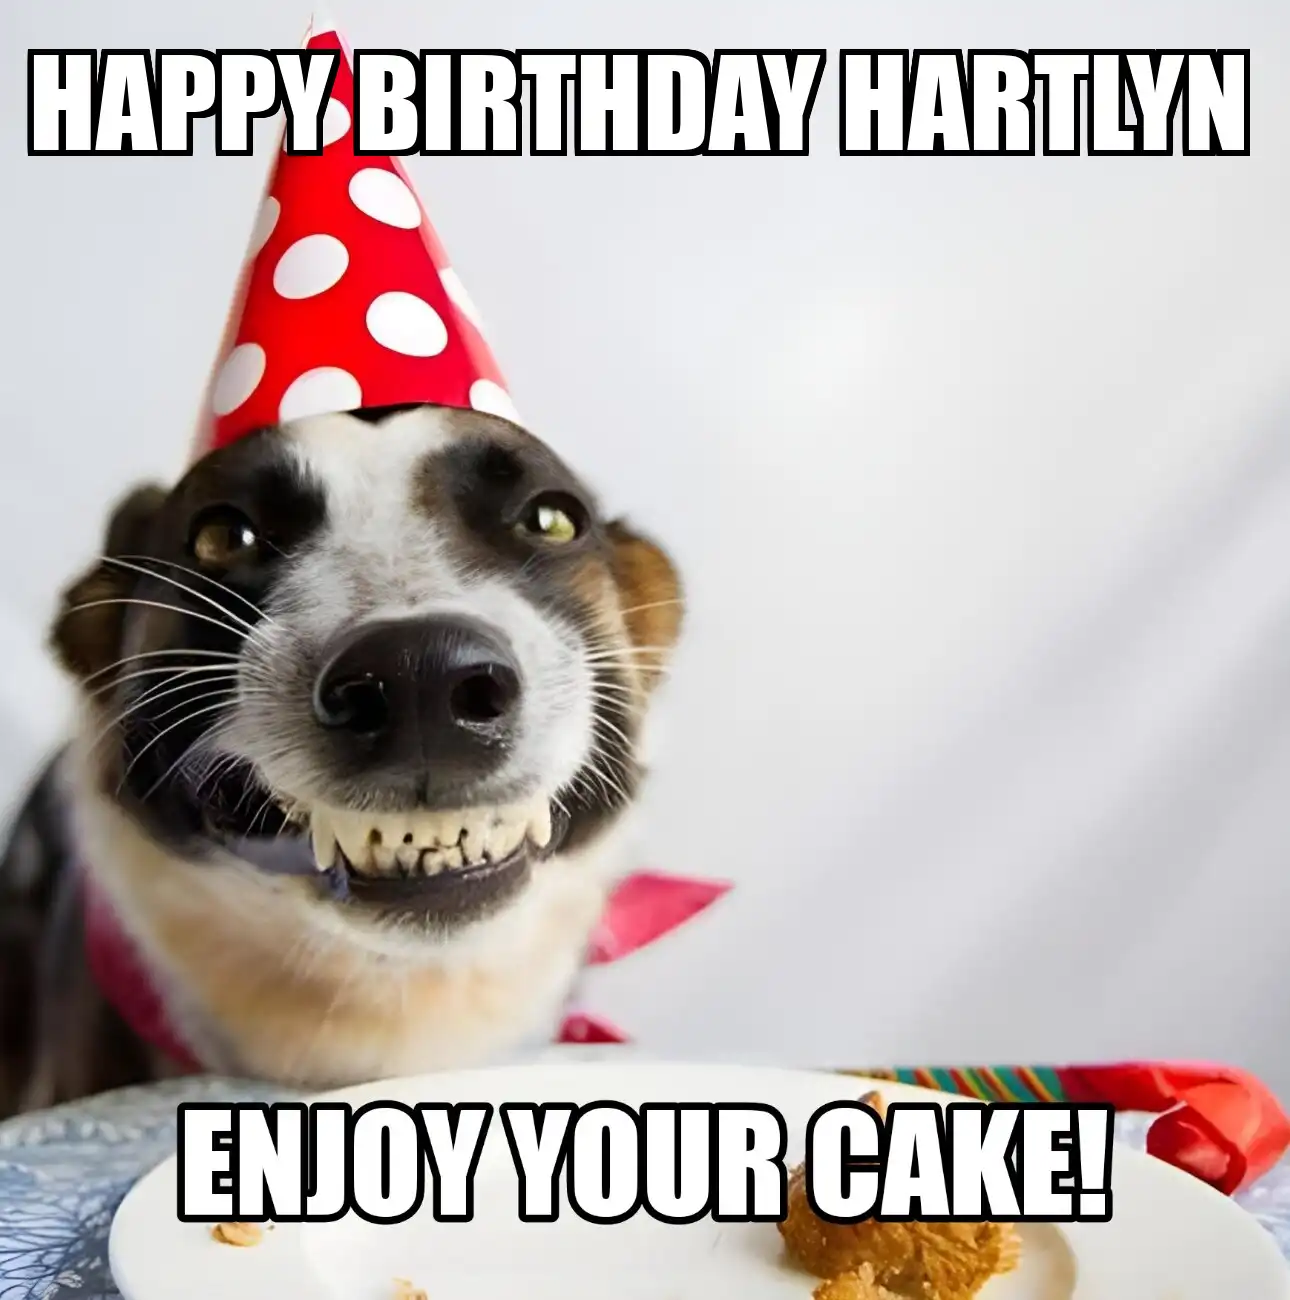 Happy Birthday Hartlyn Enjoy Your Cake Dog Meme